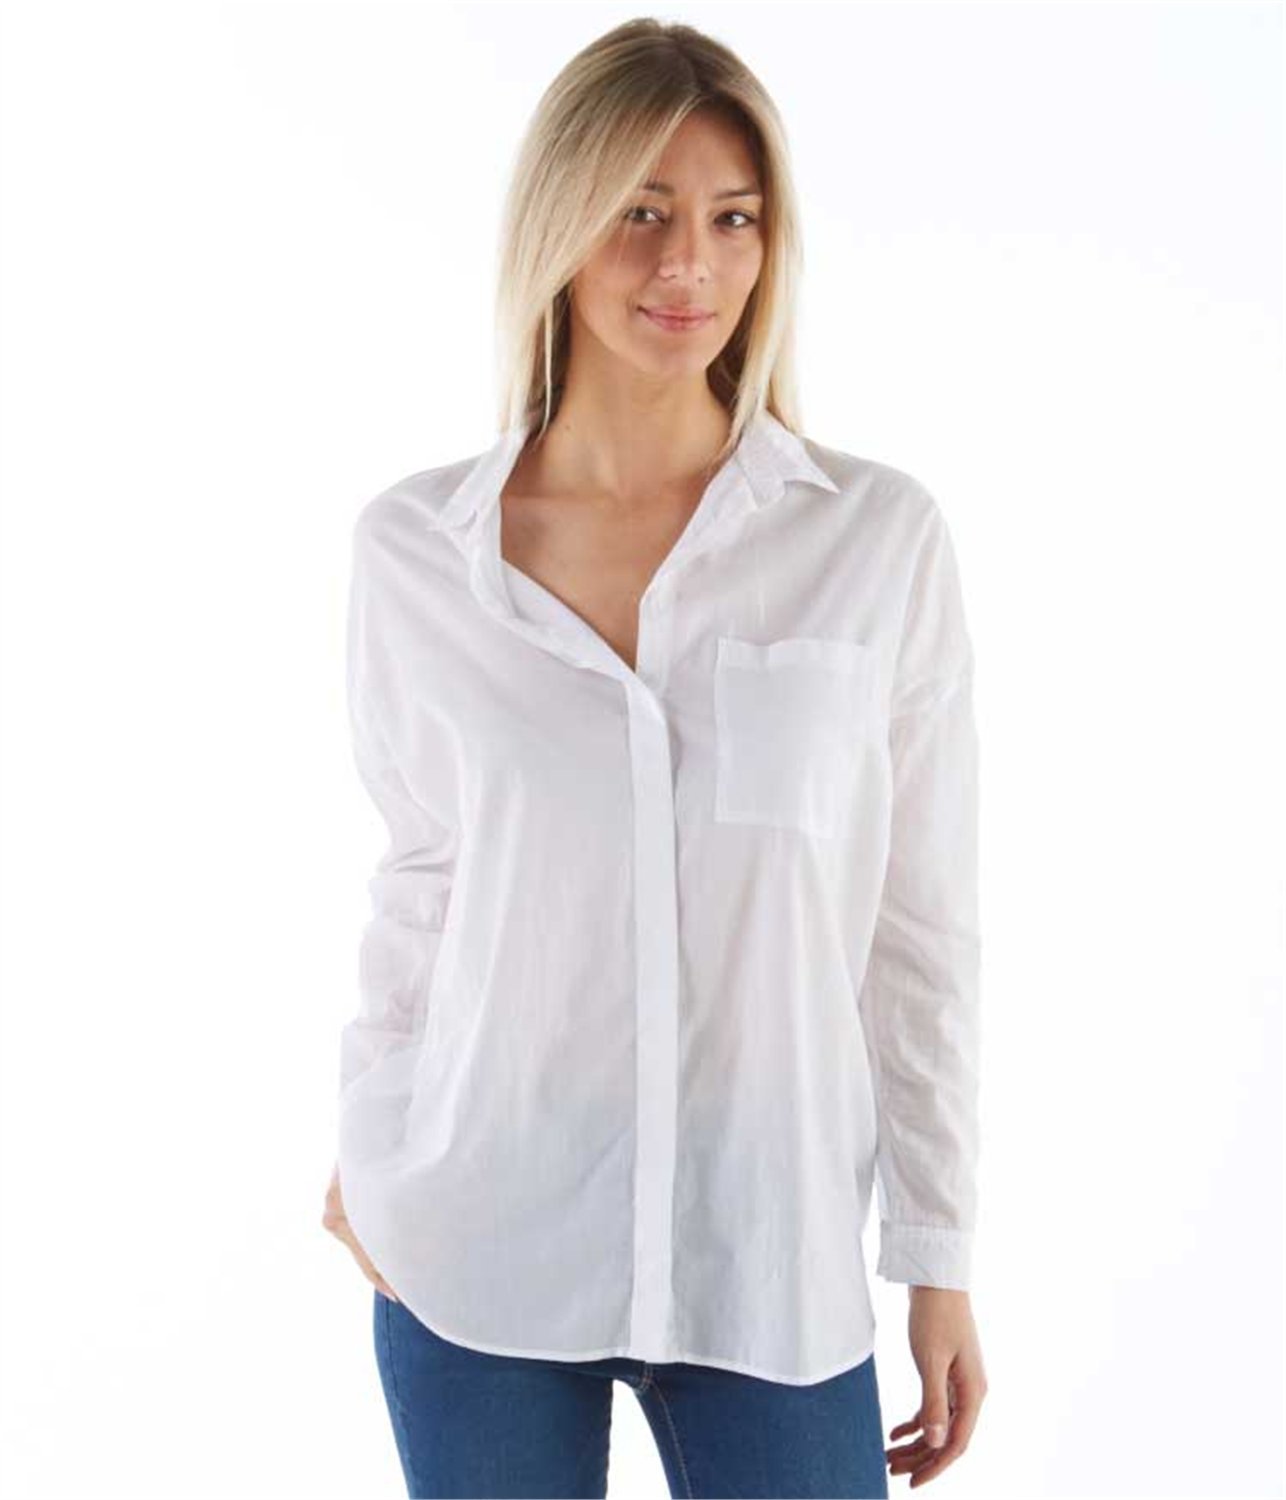 Camaieu oversize női fehér ing fotója